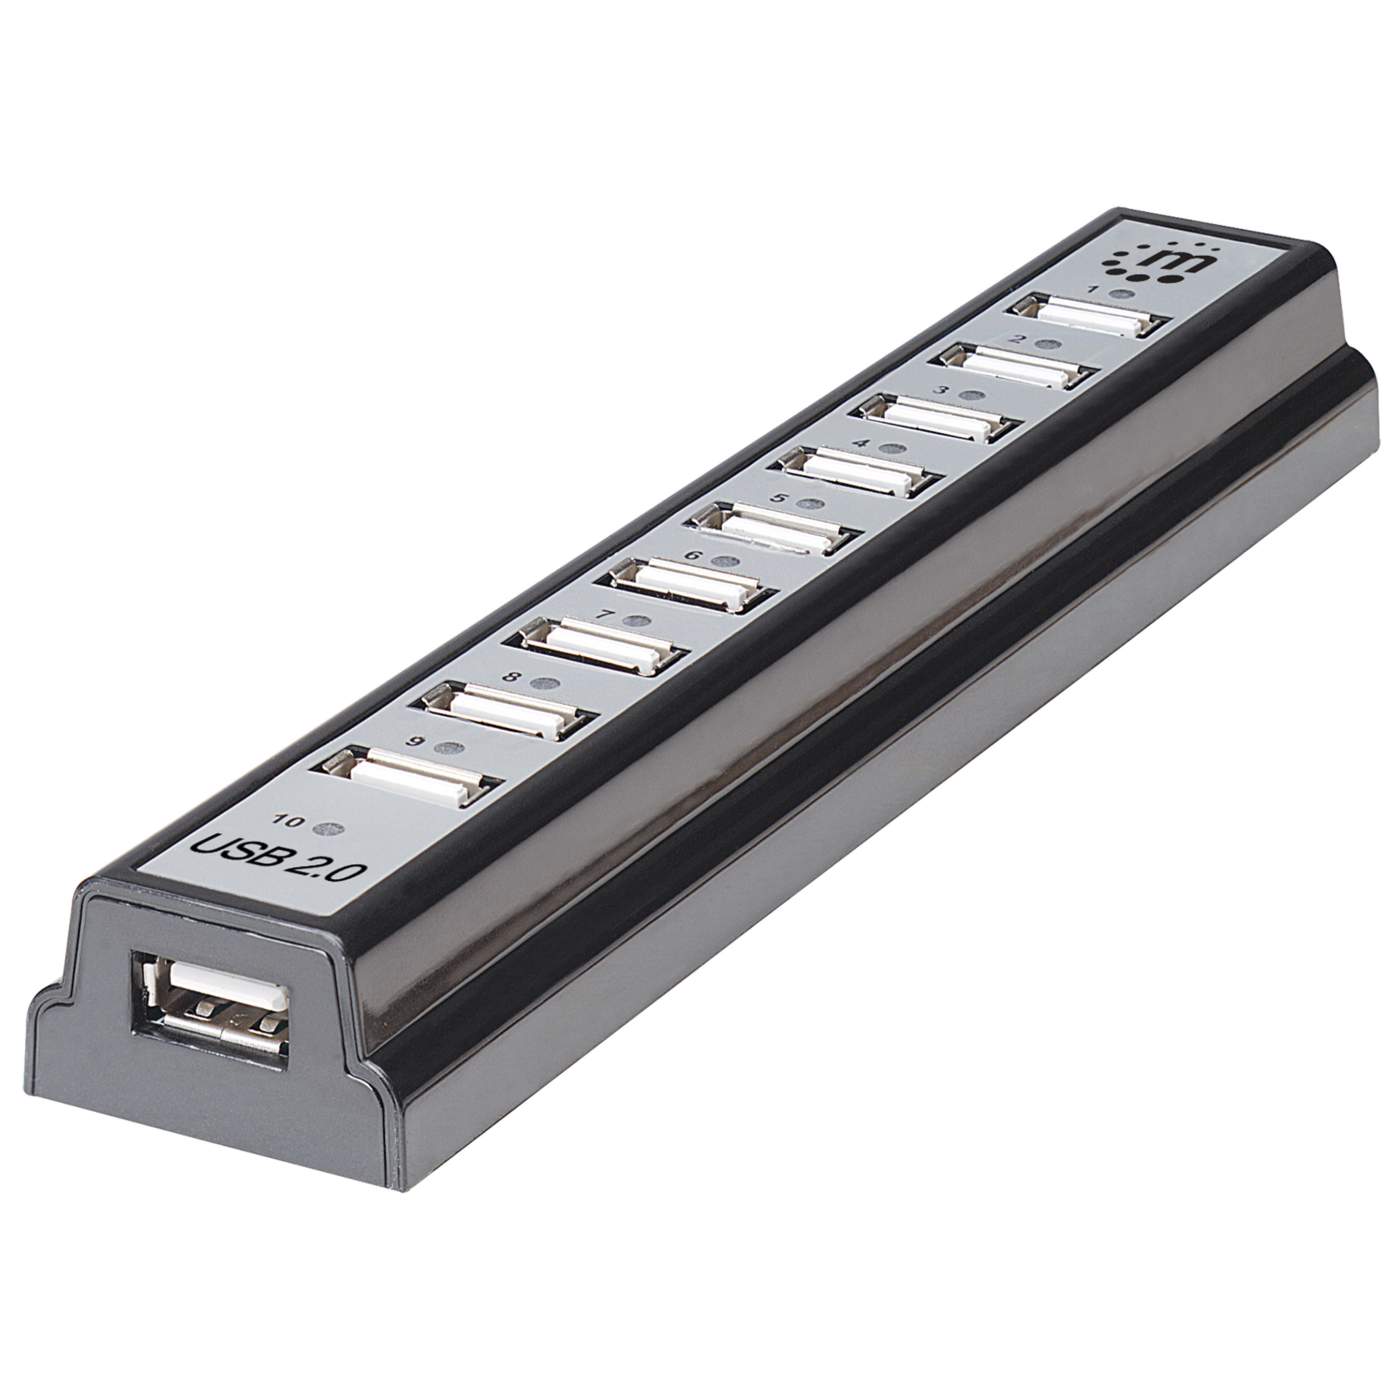 HUB / Multiport USB 10 Port USB 2.0 HI-SPEED Model P-1603 - 2024